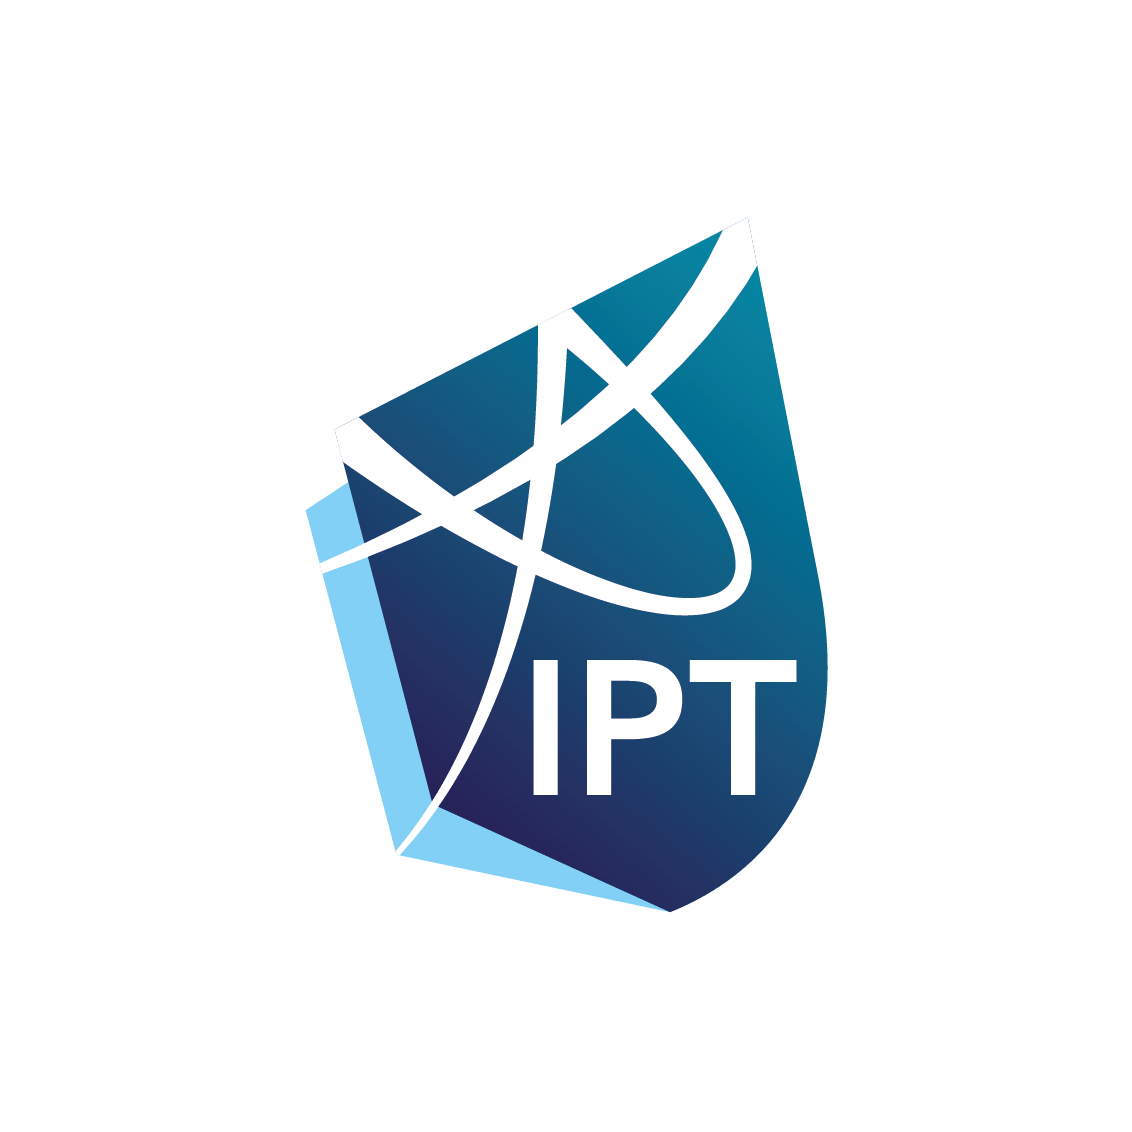 Small Size Logo - New IPT logo ! – IPT